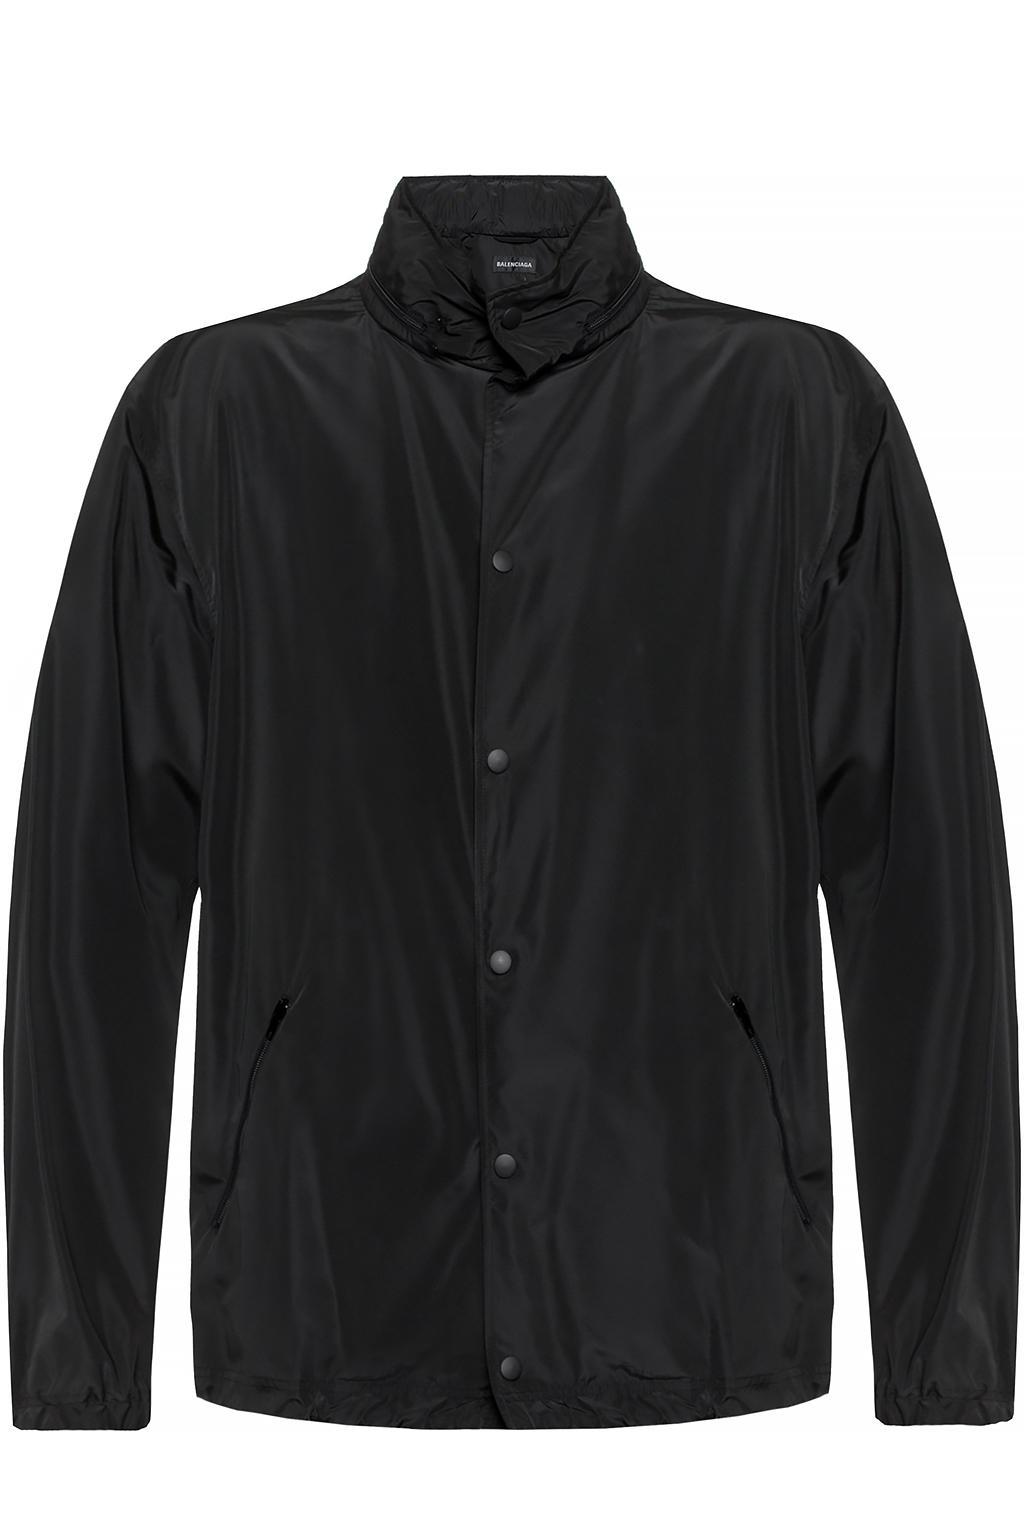 Balenciaga Synthetic 'oversize' Rain Jacket Black for Men | Lyst